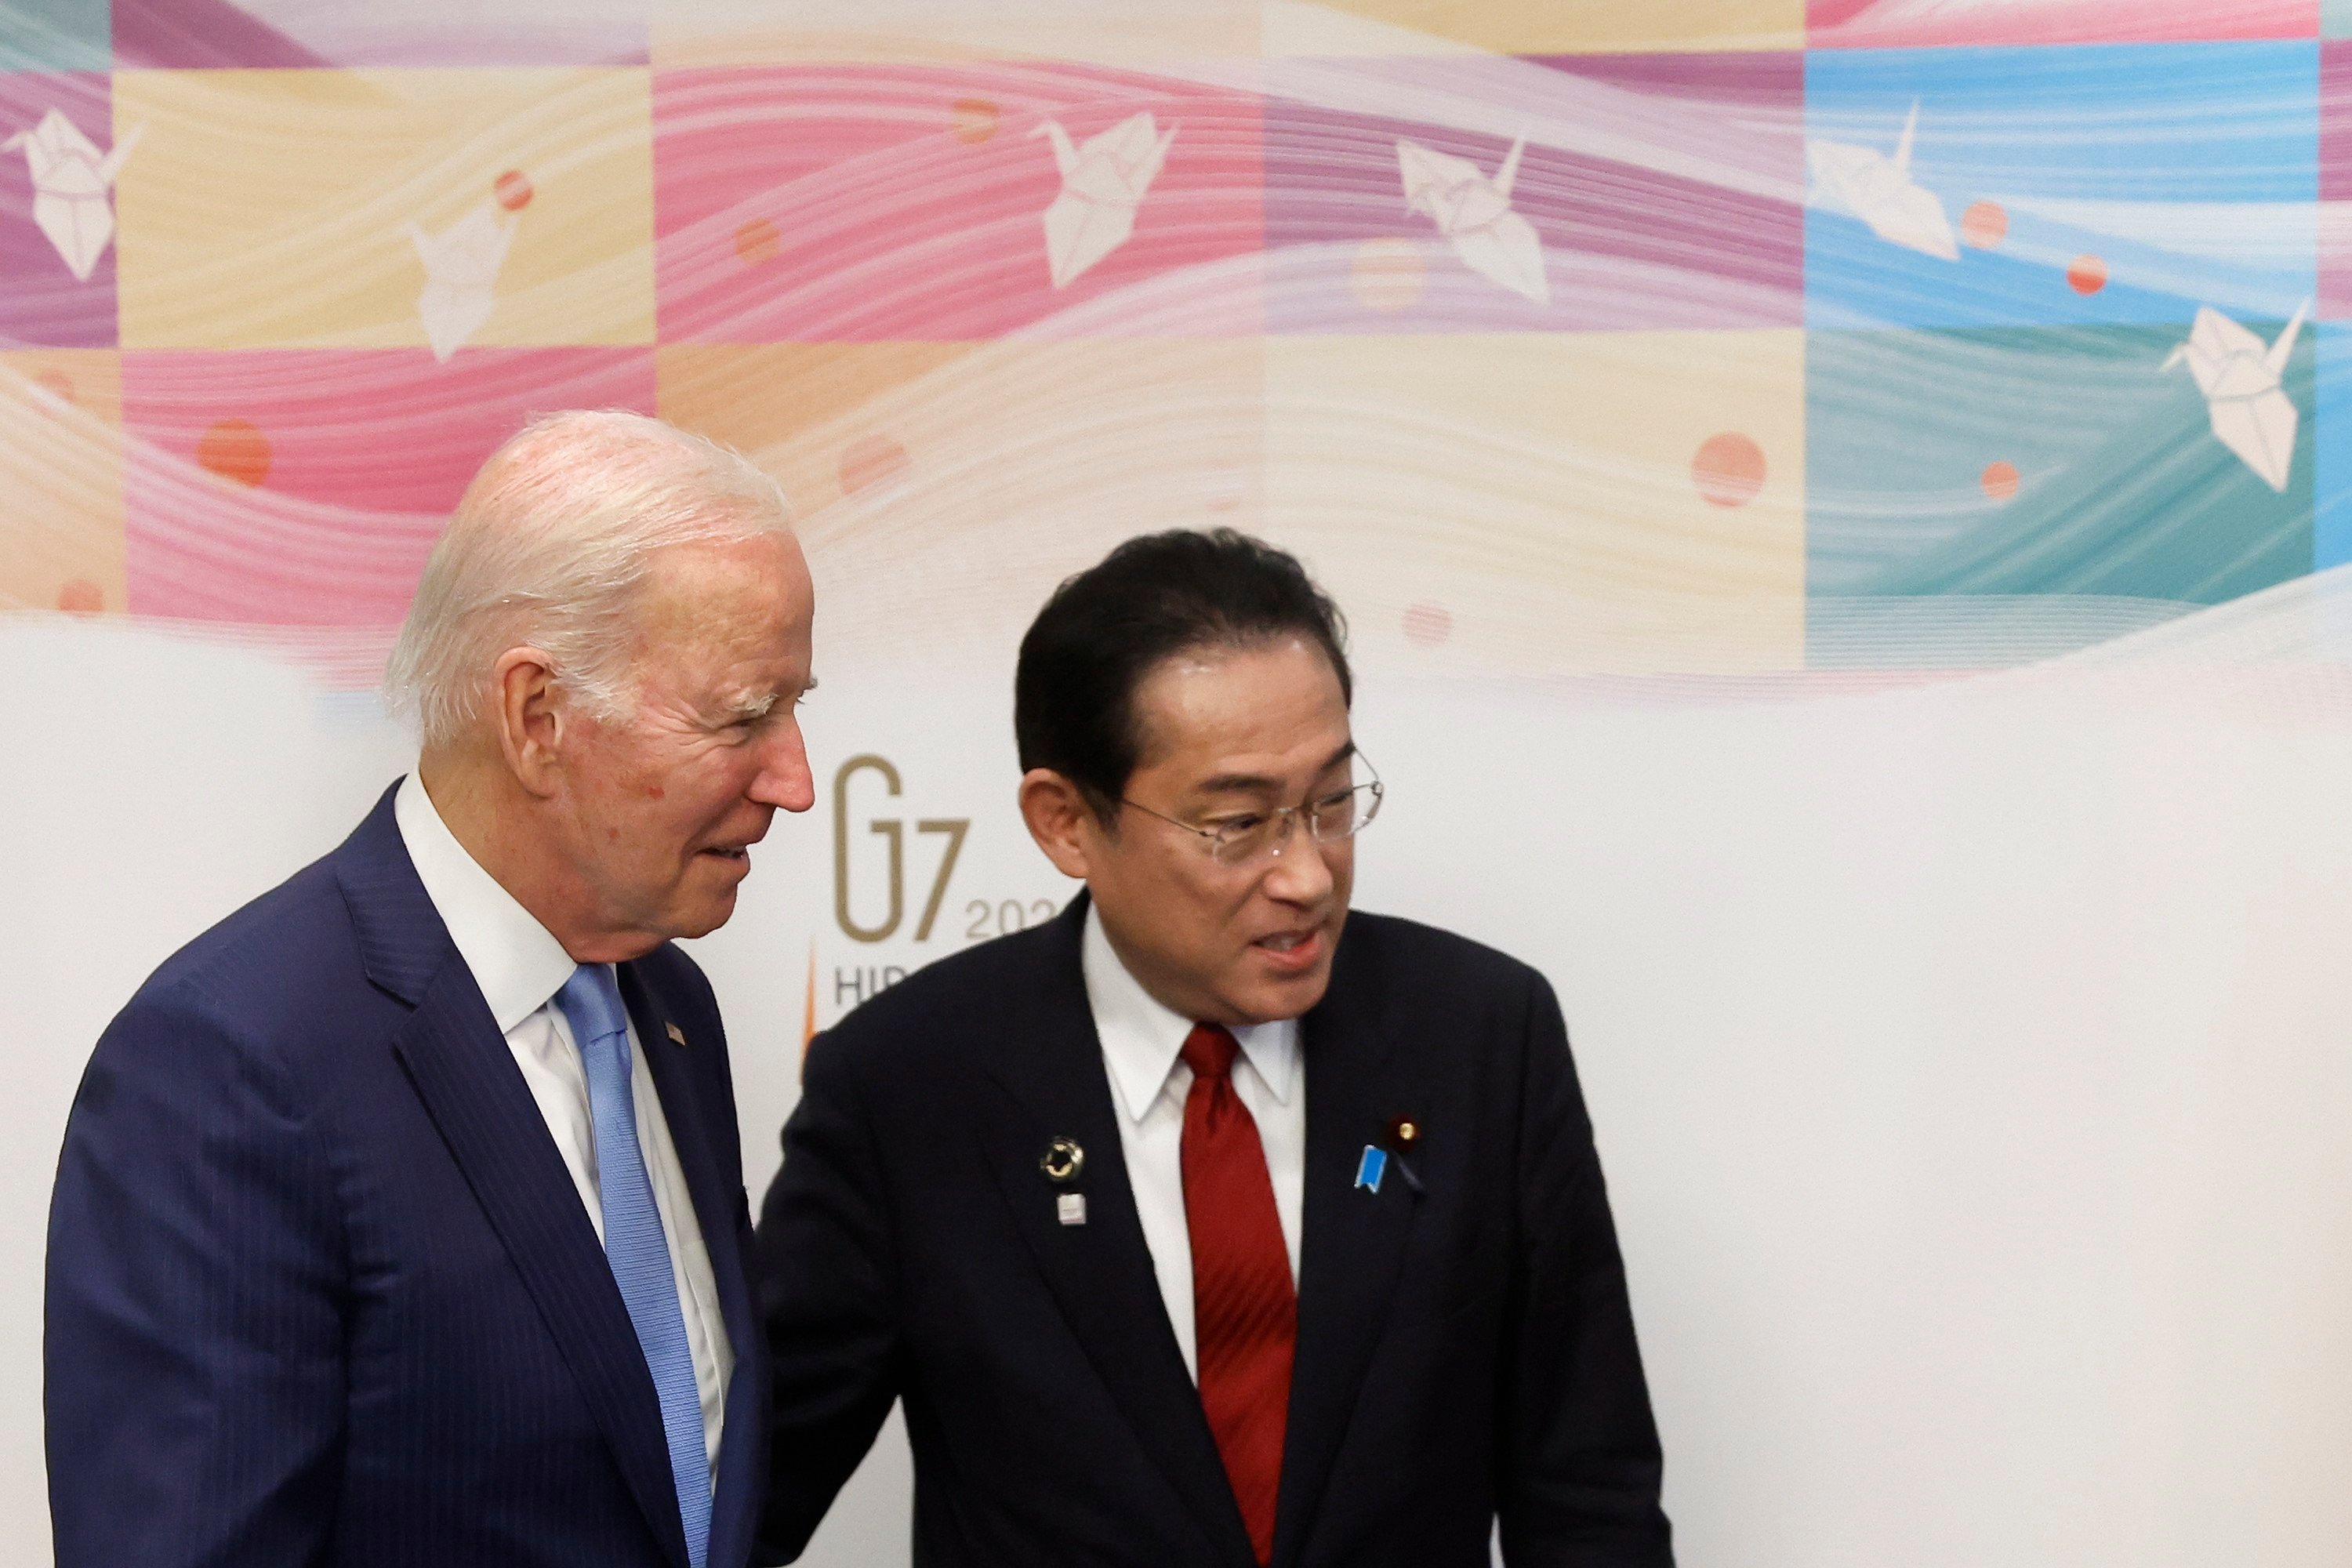 US President Joe Biden and Japanese Prime Minister Fumio Kishida speak ahead of the G7 Hiroshima Summit in Hiroshima, Japan, in May 2023. Photo: EPA-EFE/Pool